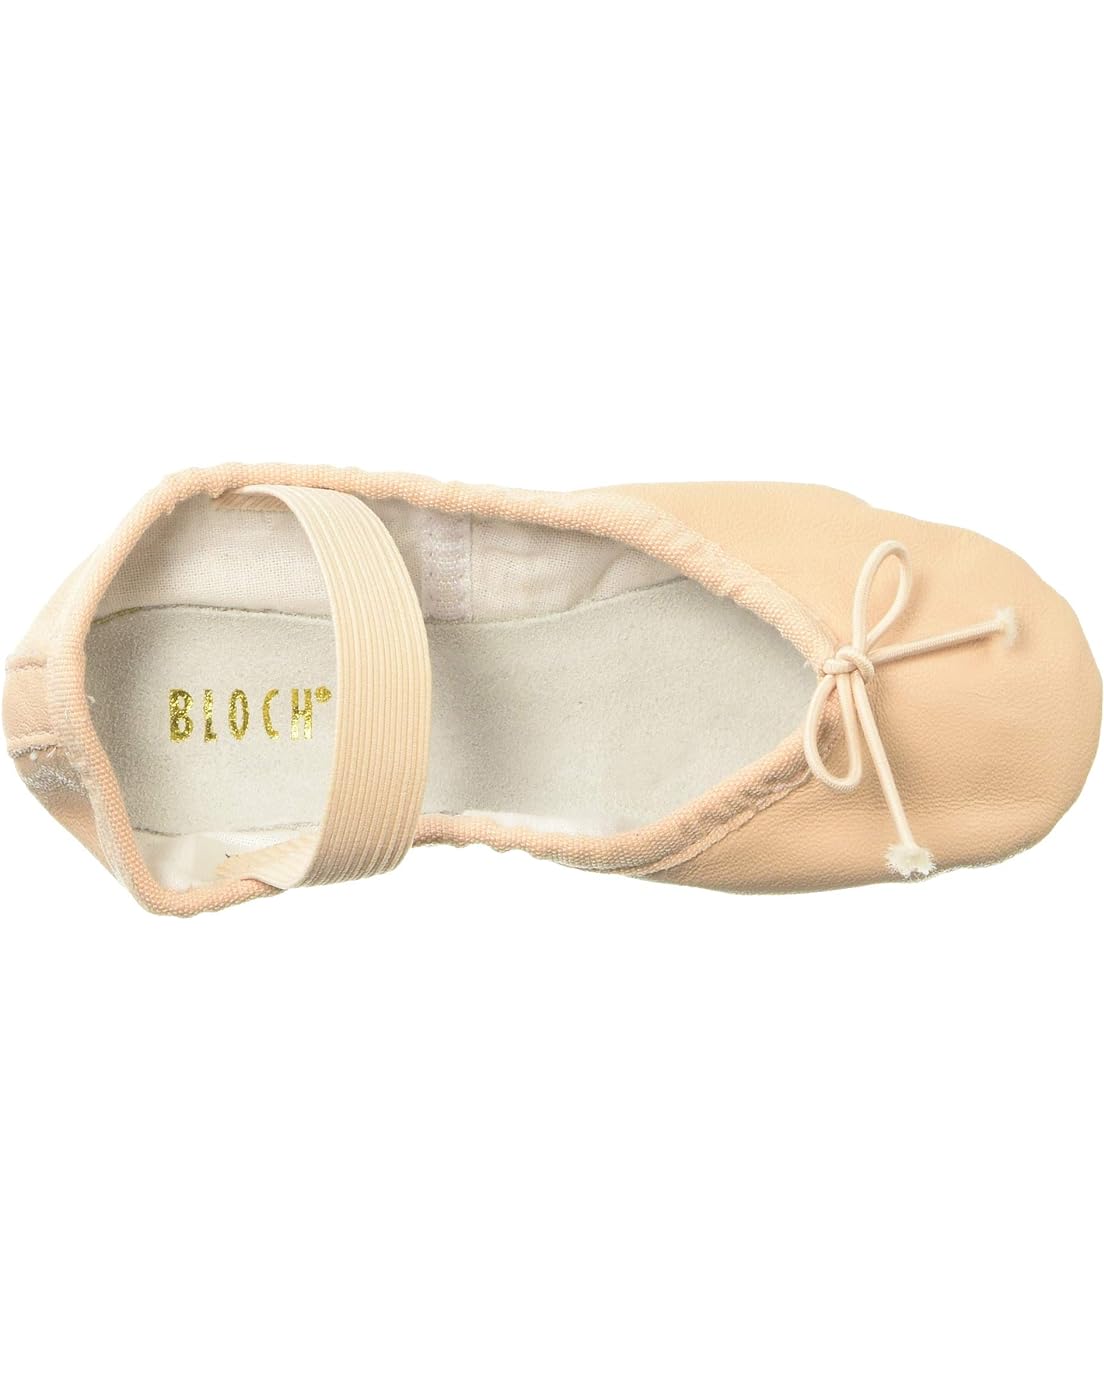  Bloch Kids Dansoft Ballet Shoe (Toddler/Little Kid)